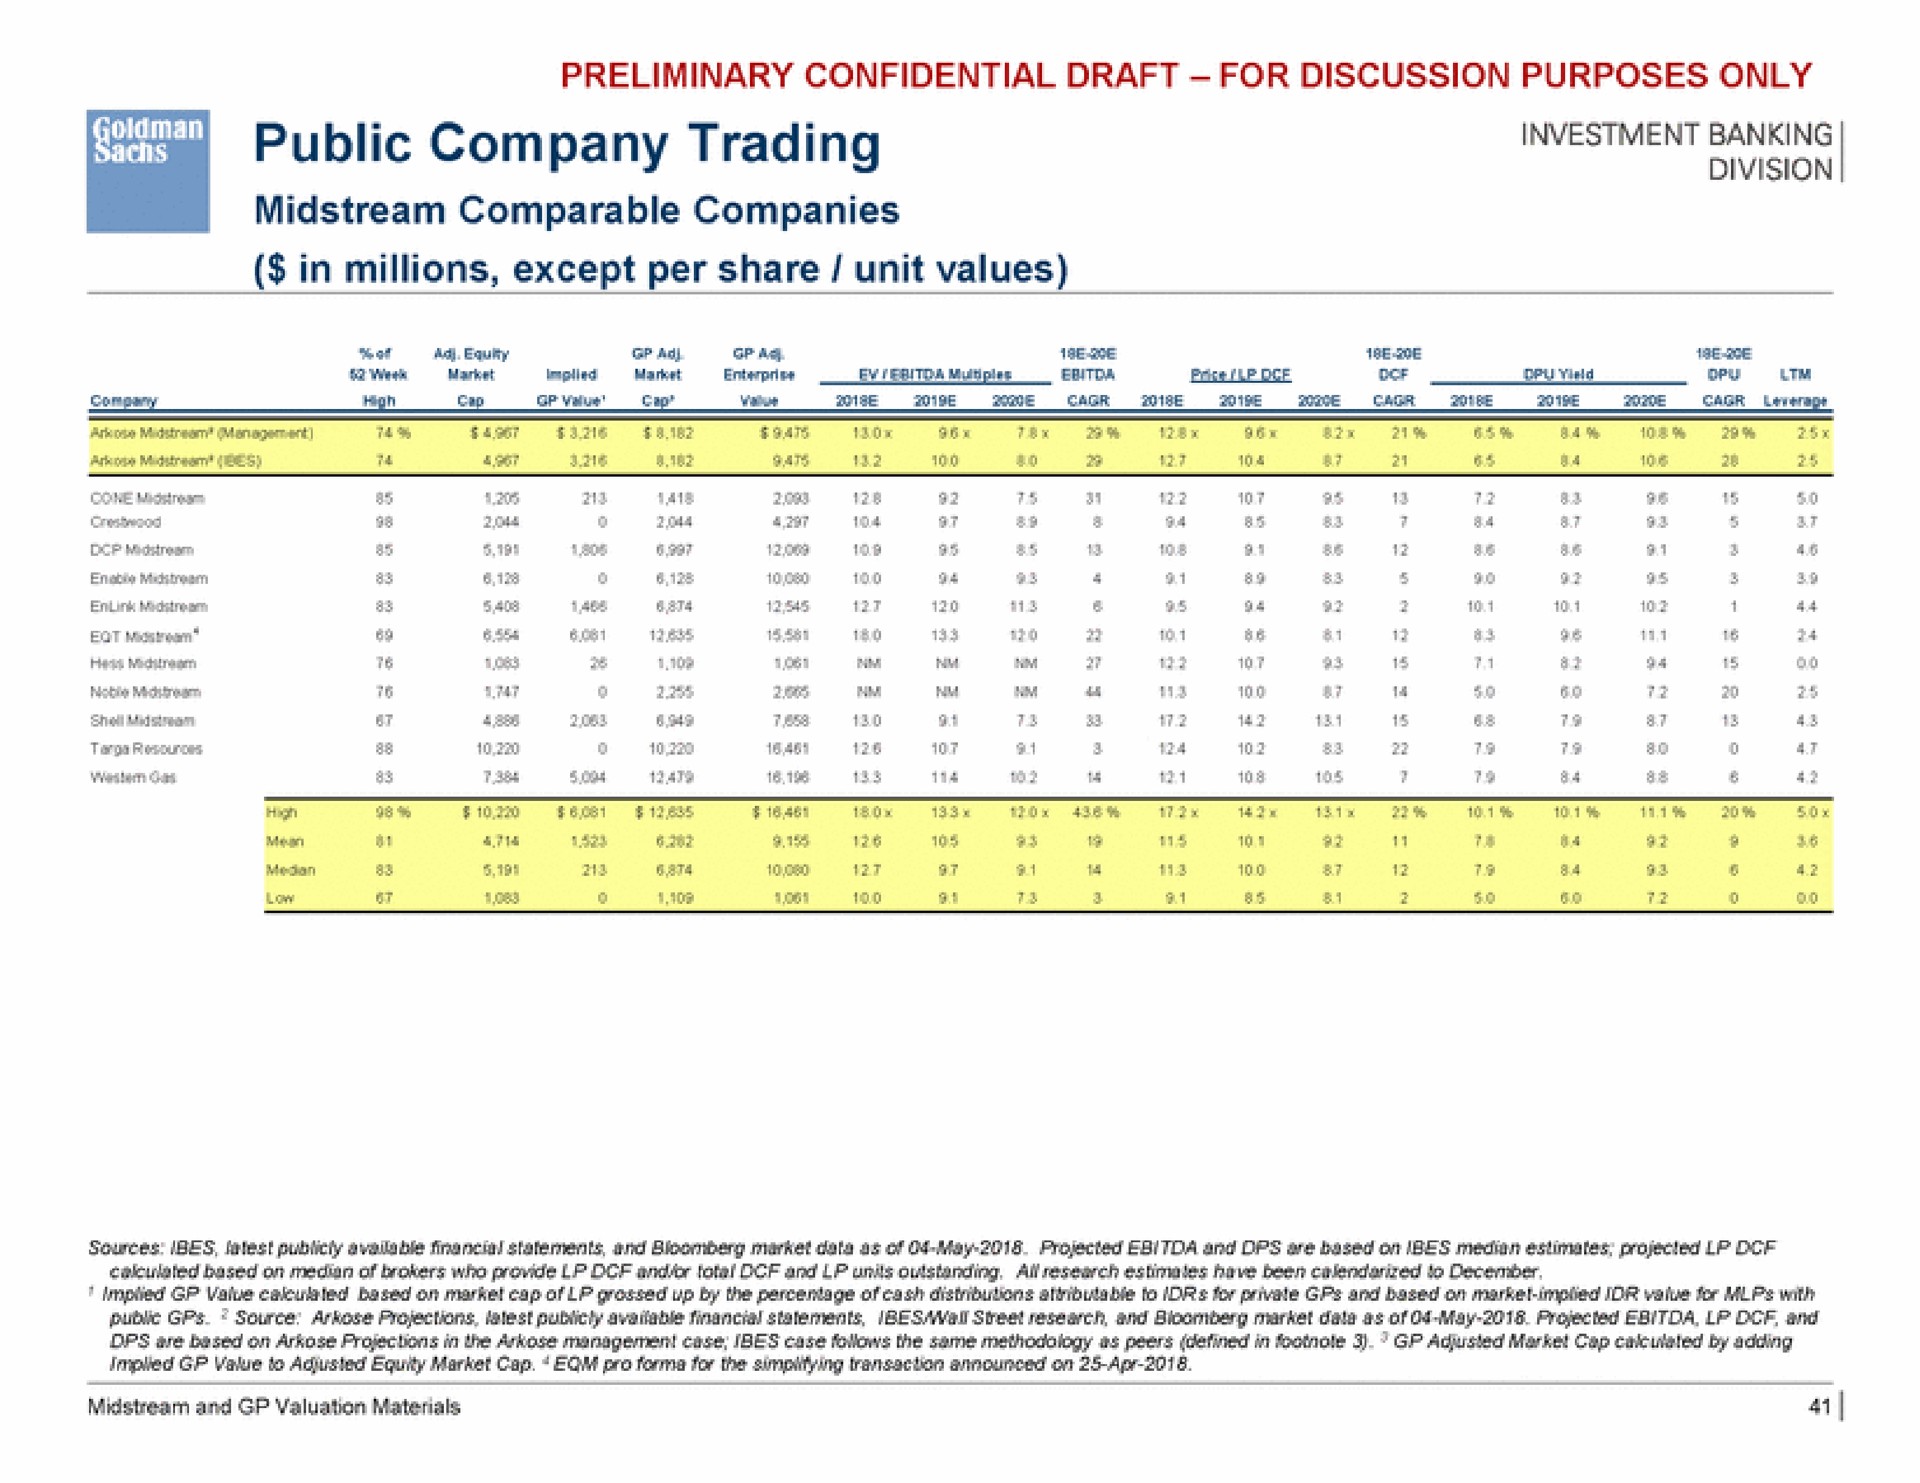 a public company trading | Goldman Sachs